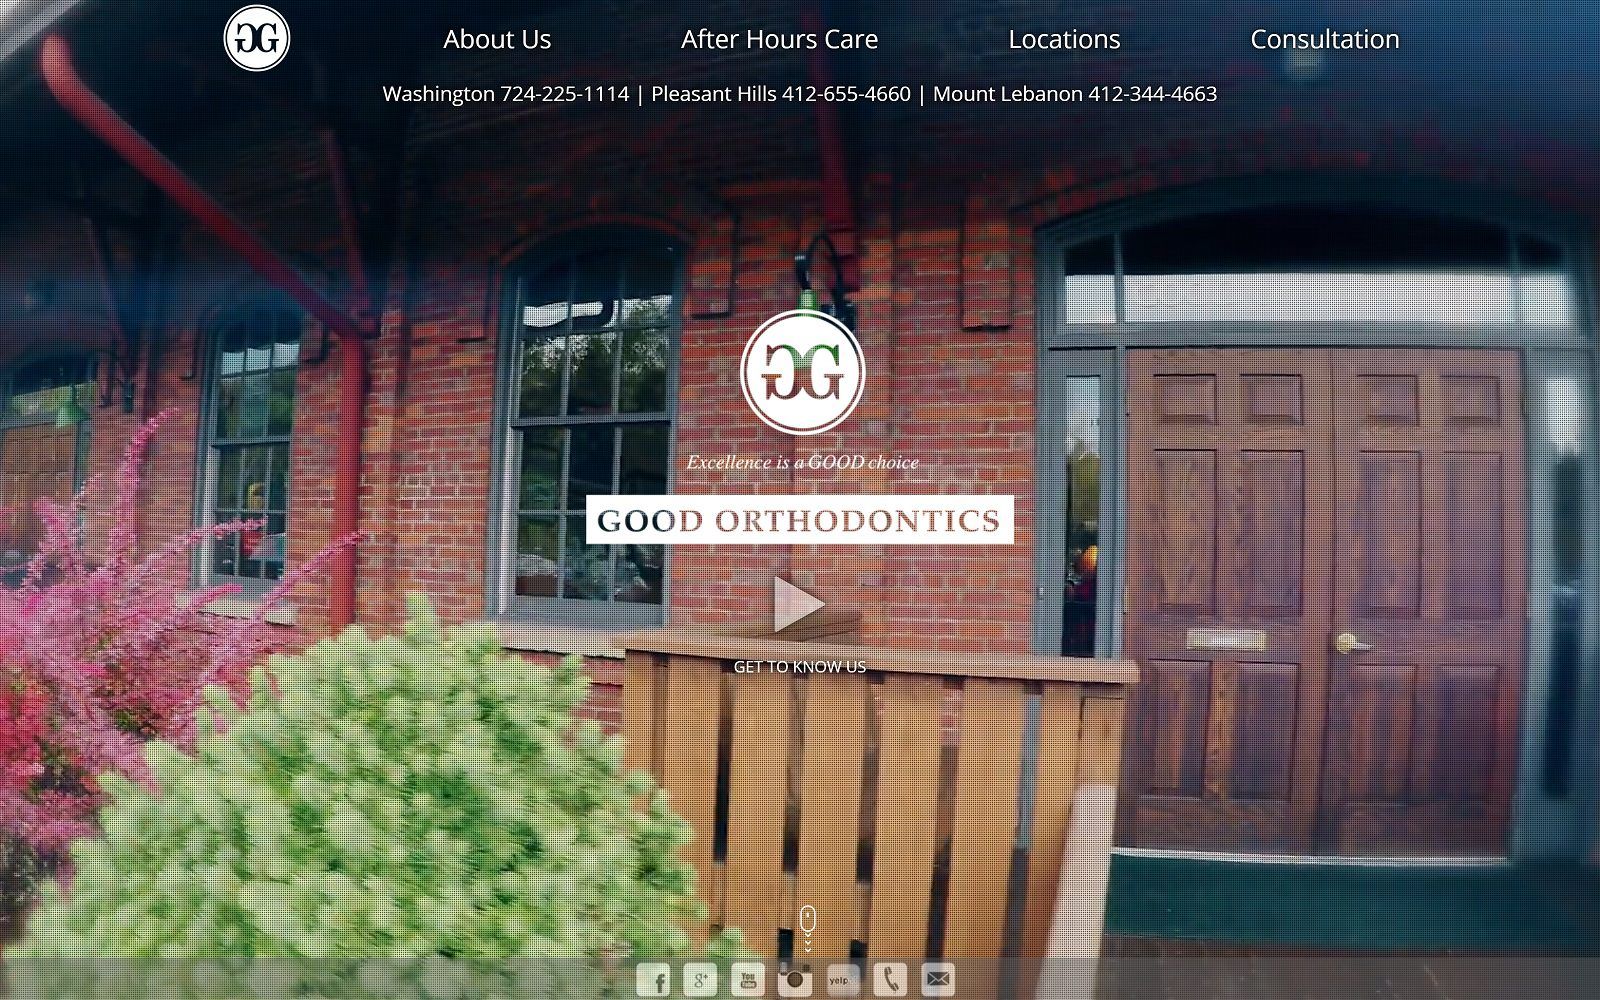 The screenshot of good orthodontics website